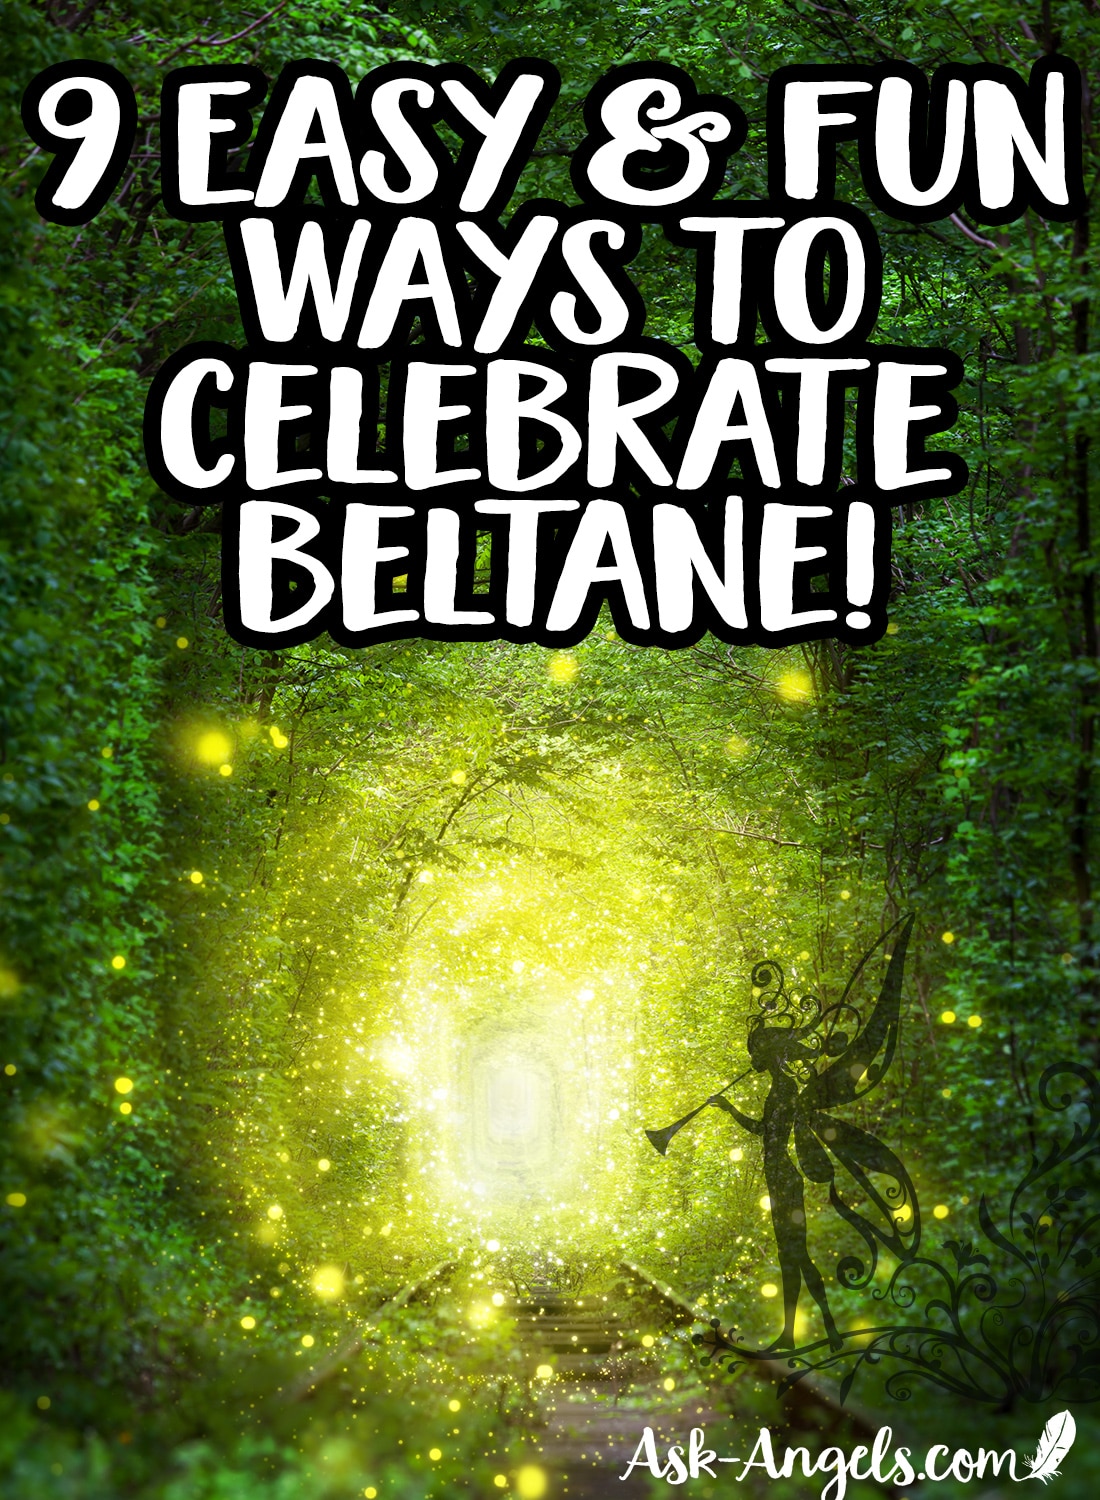 9 Easy & fun ways to celebrate beltane!